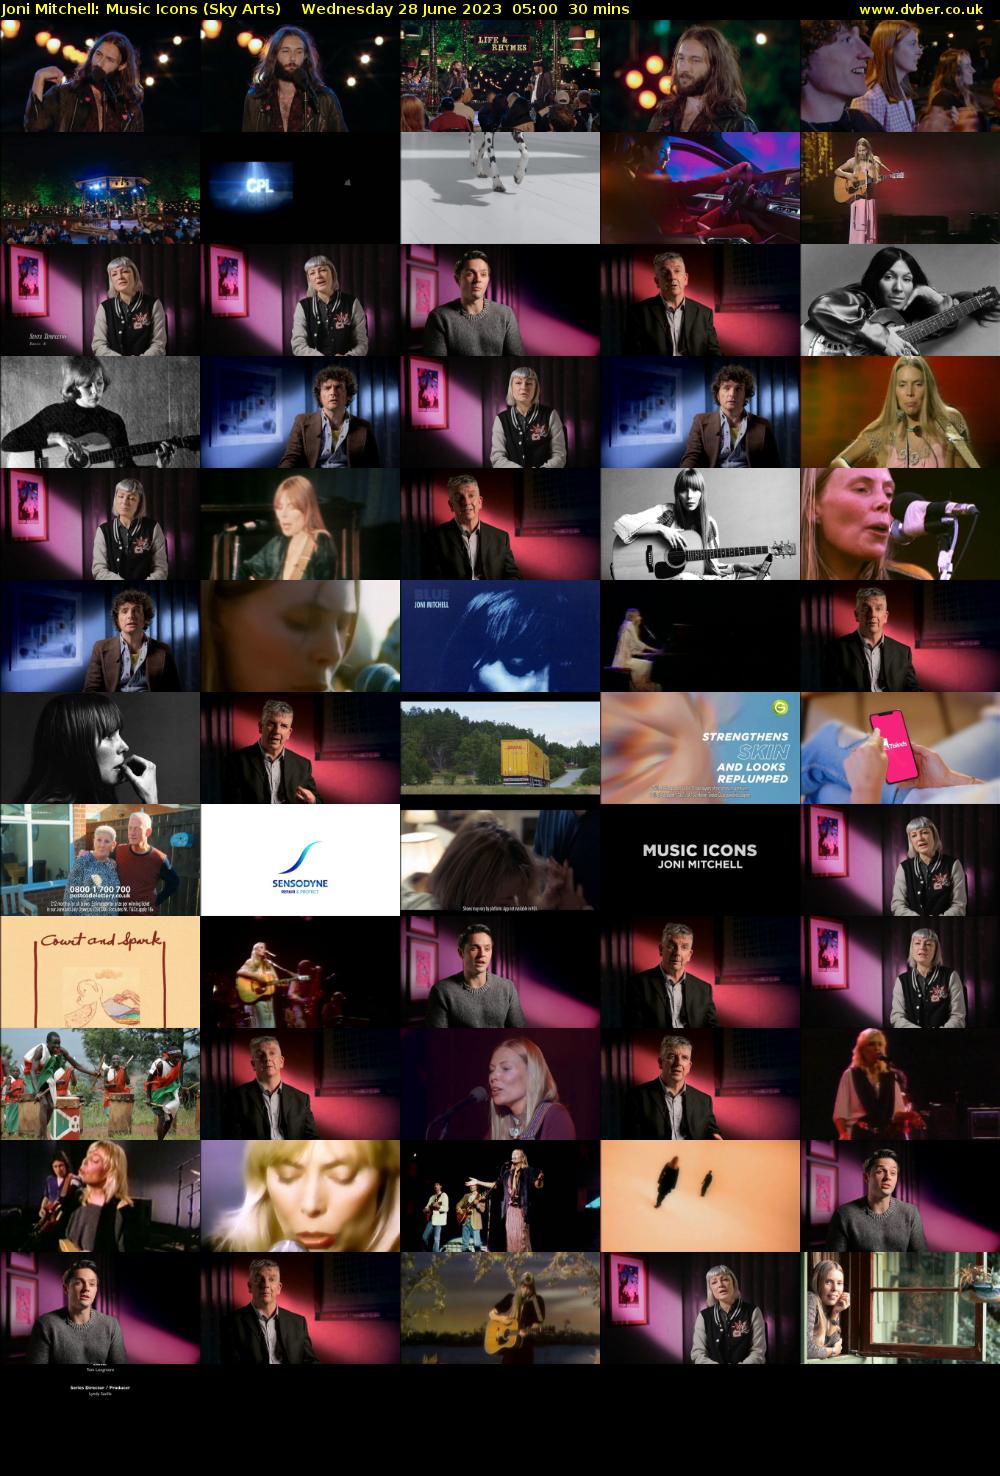 Joni Mitchell: Music Icons (Sky Arts) Wednesday 28 June 2023 05:00 - 05:30